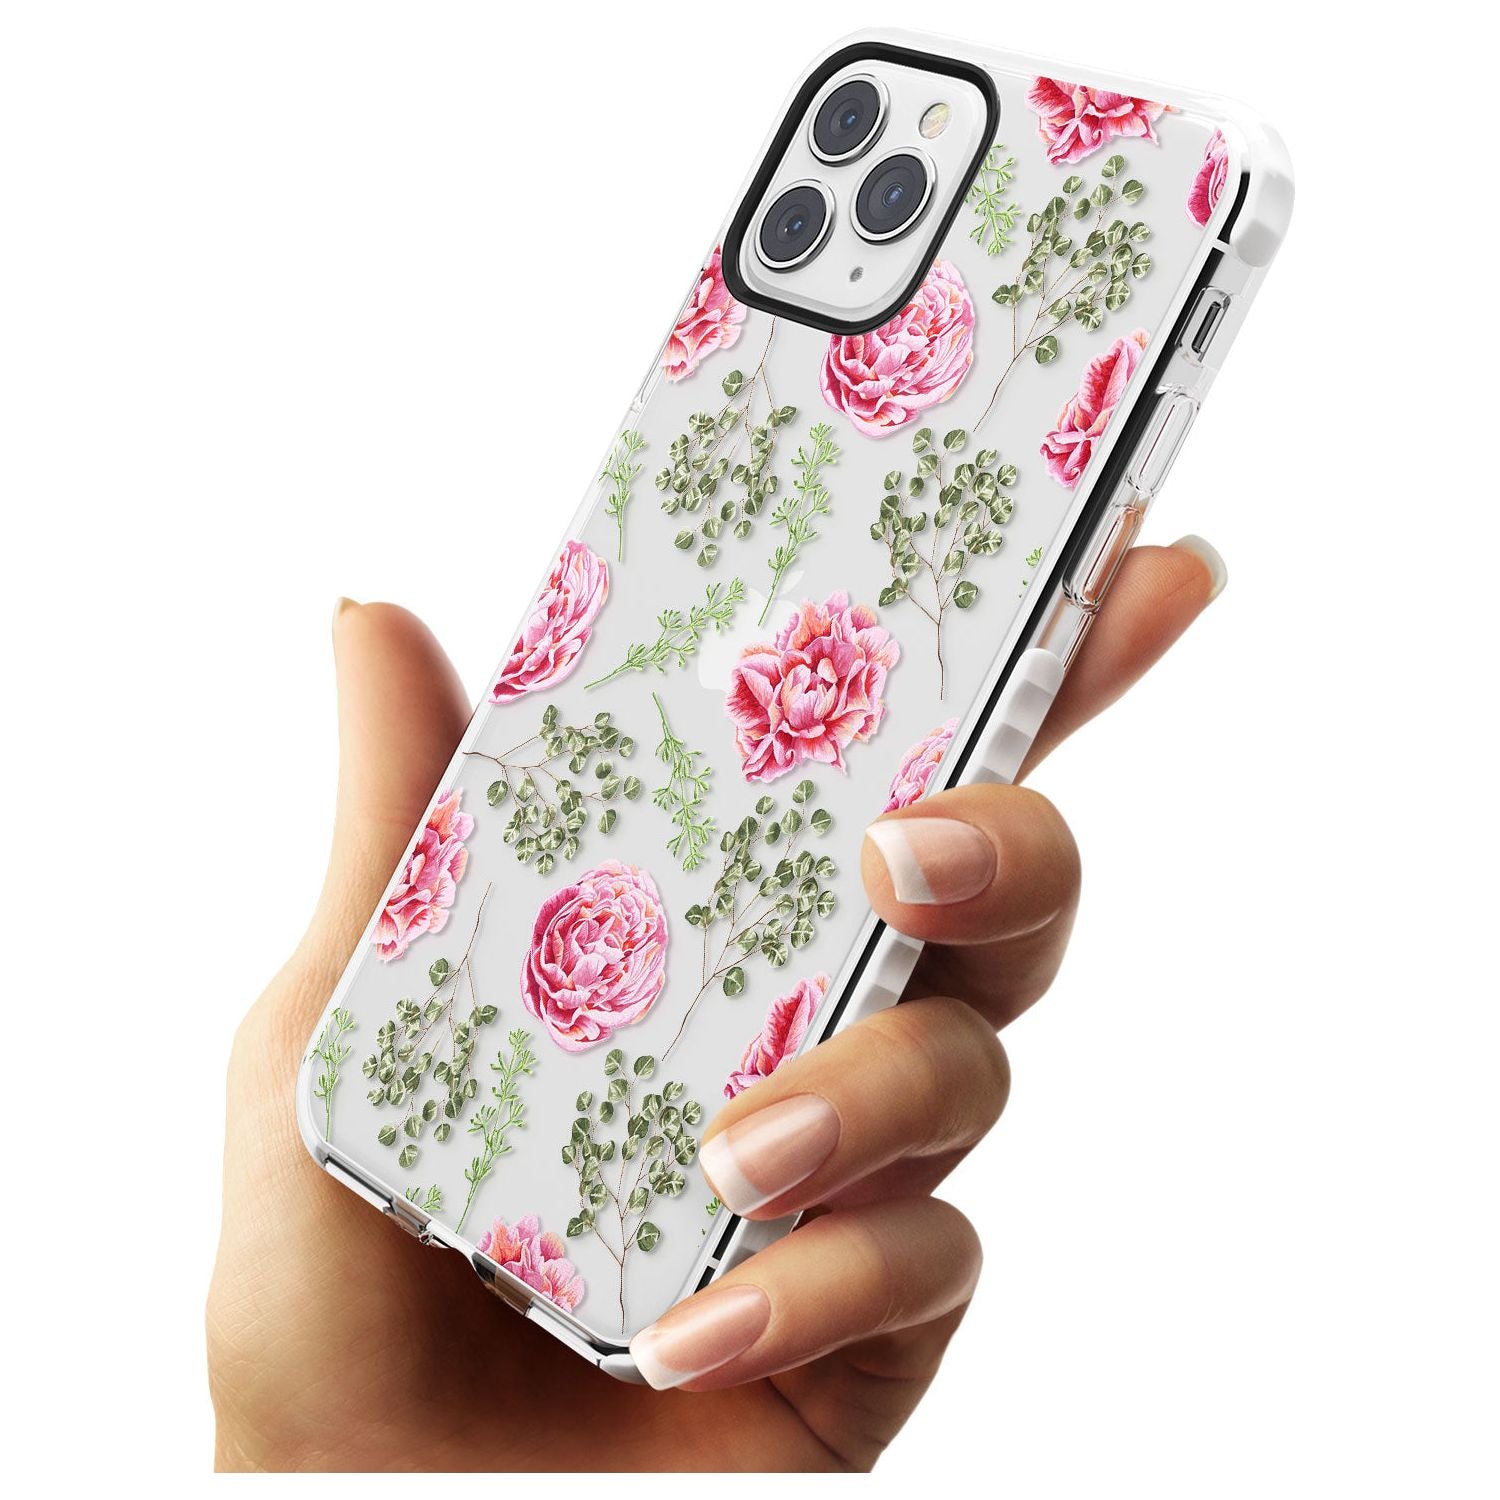 Roses & Eucalyptus Transparent Floral Impact Phone Case for iPhone 11 Pro Max